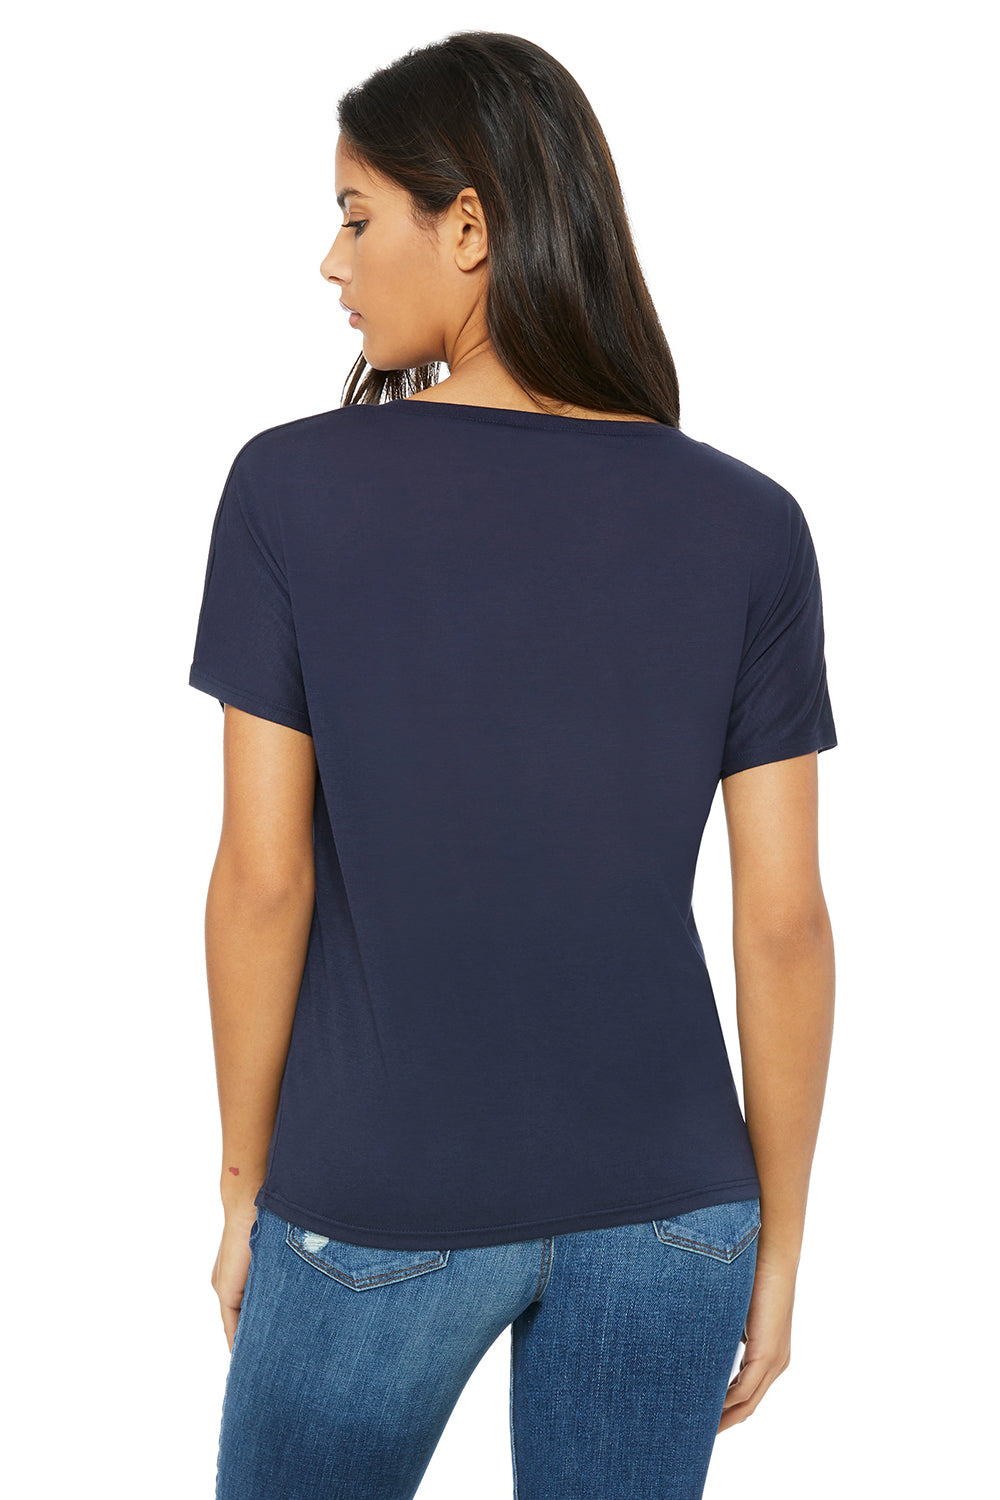 Bella + Canvas 8815 Womens Slouchy Short Sleeve V-Neck T-Shirt Midnight Blue Back